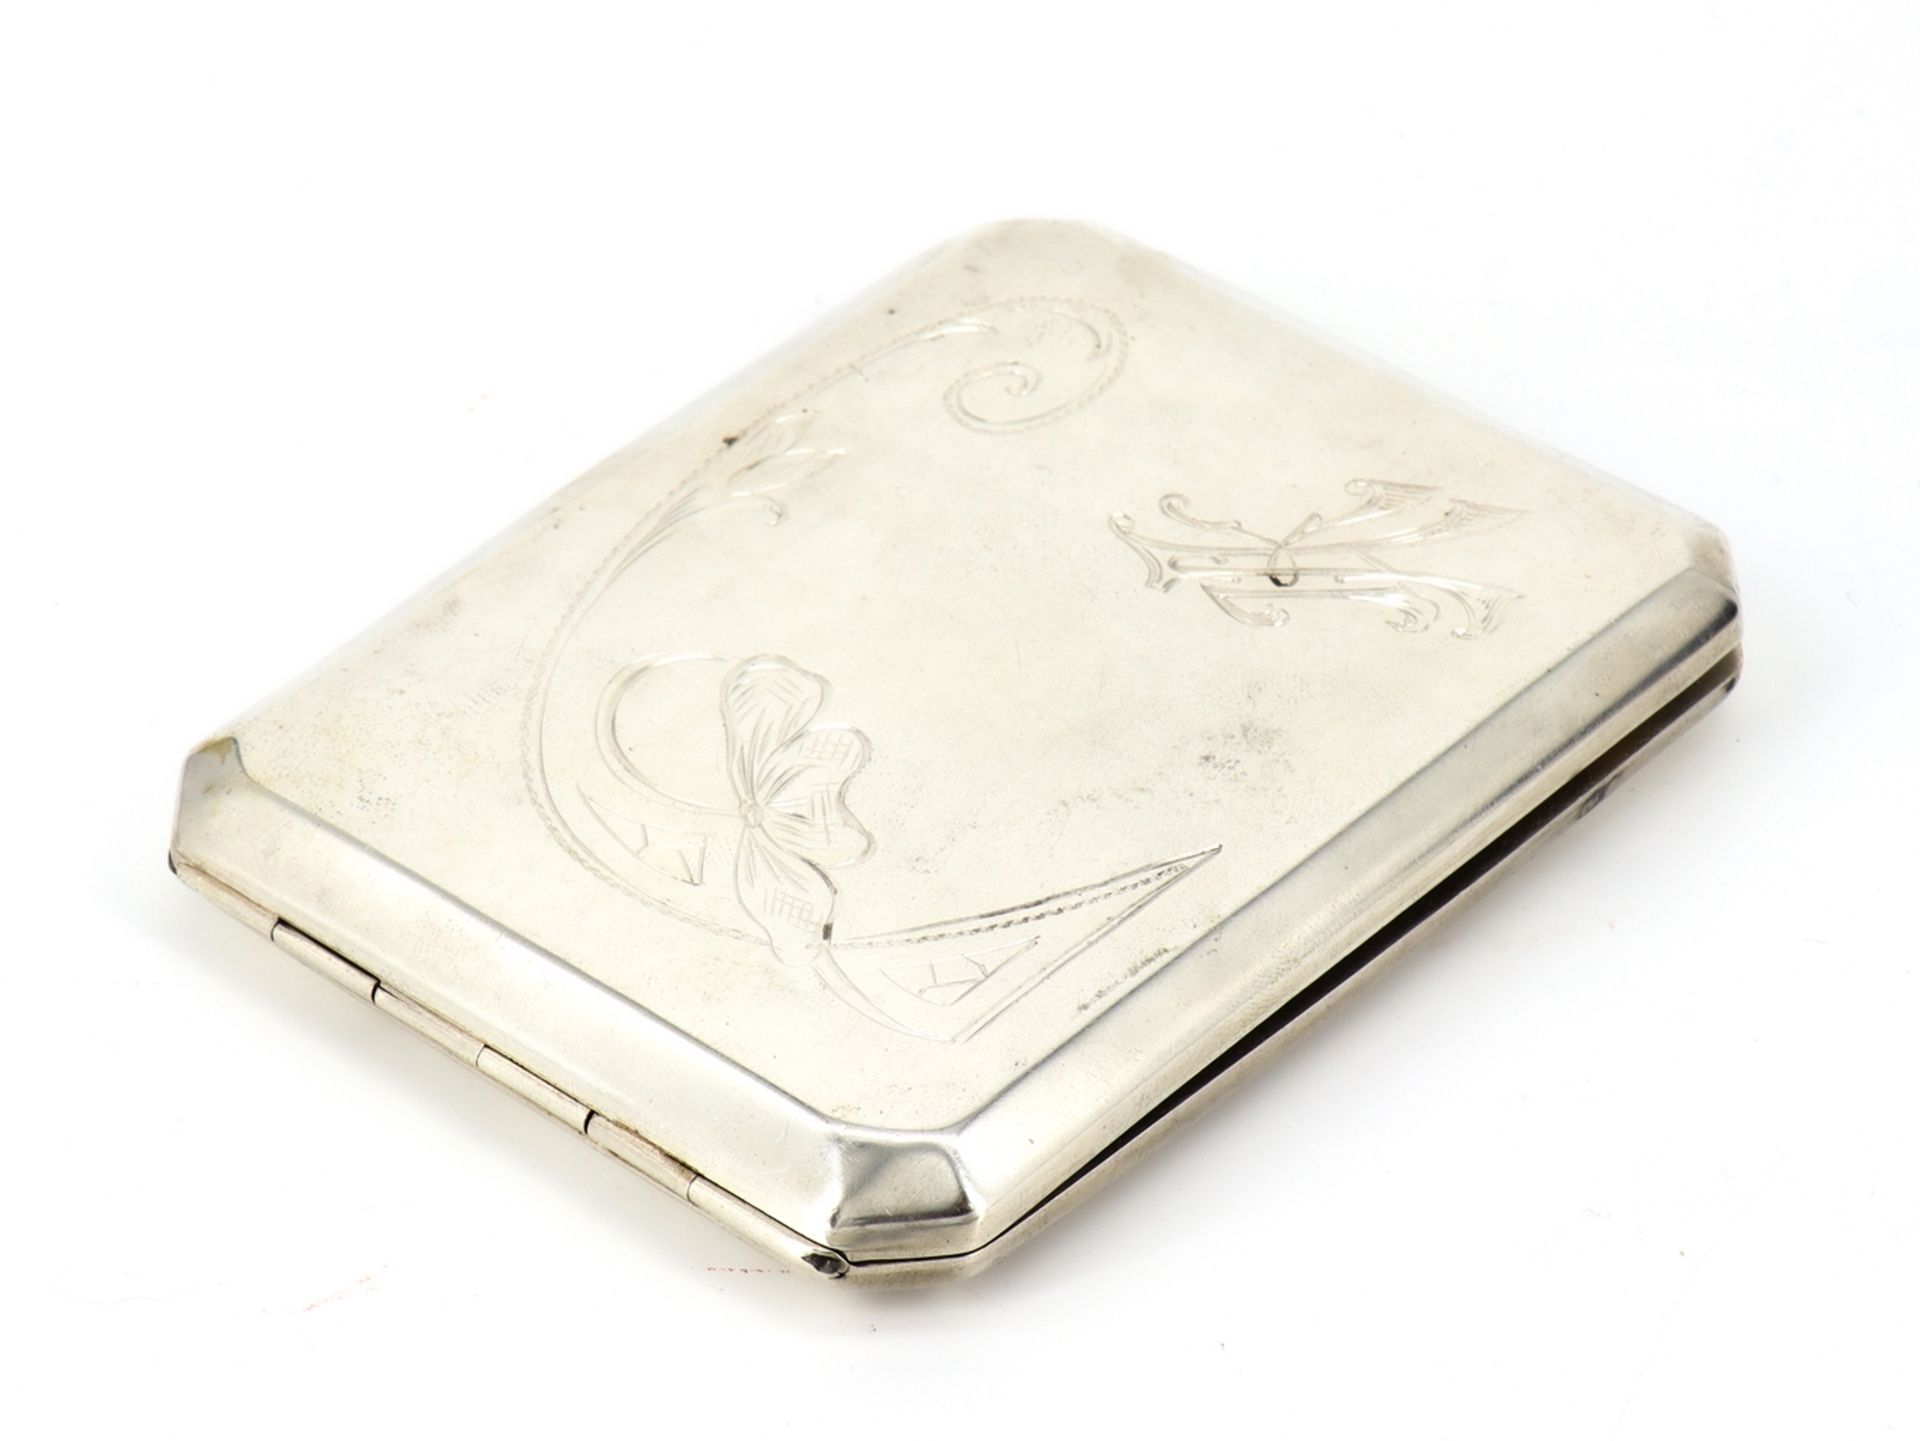 Art nouveau silver cigarette case, Baltic silver, around 1900 - Image 2 of 6